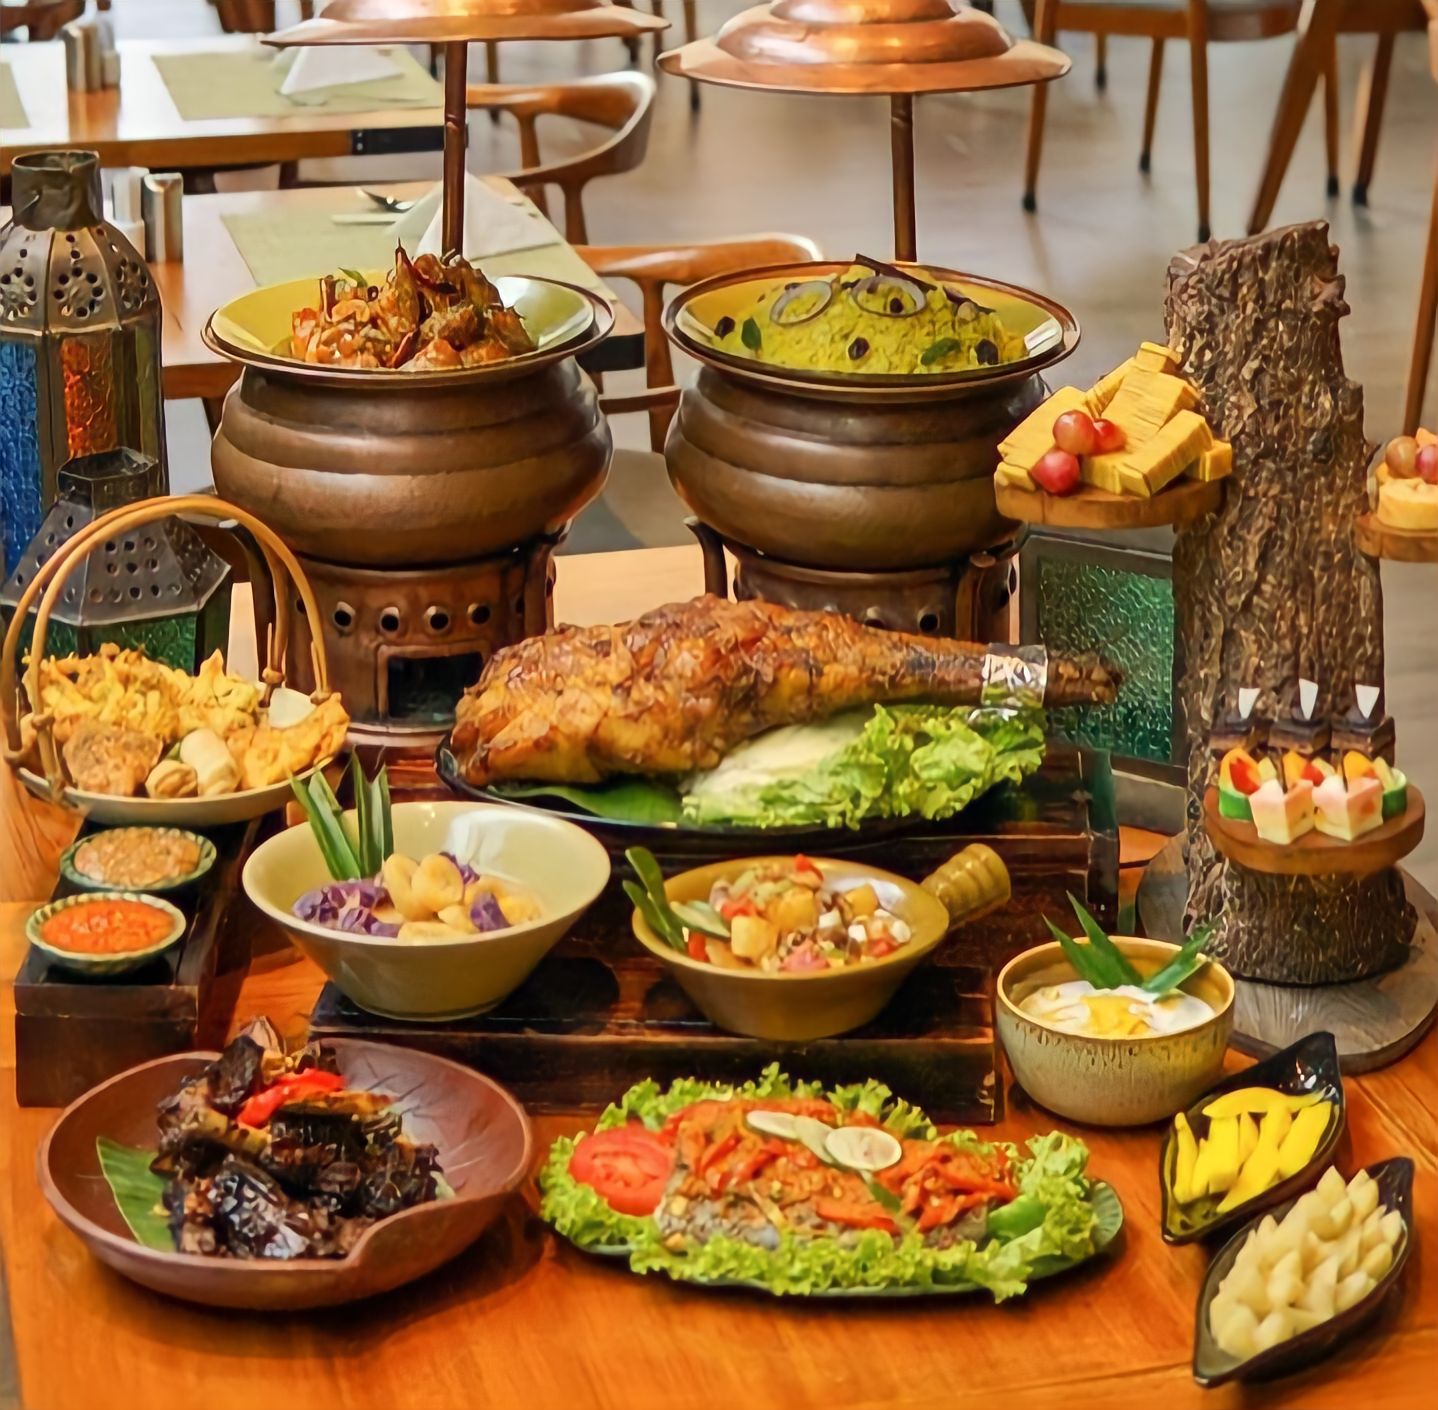 Jelajahi Ragam Pilihan Buka Puasa All You Can Eat di 74 Hotel Bintang 4 & 5 Terbaik di Jakarta